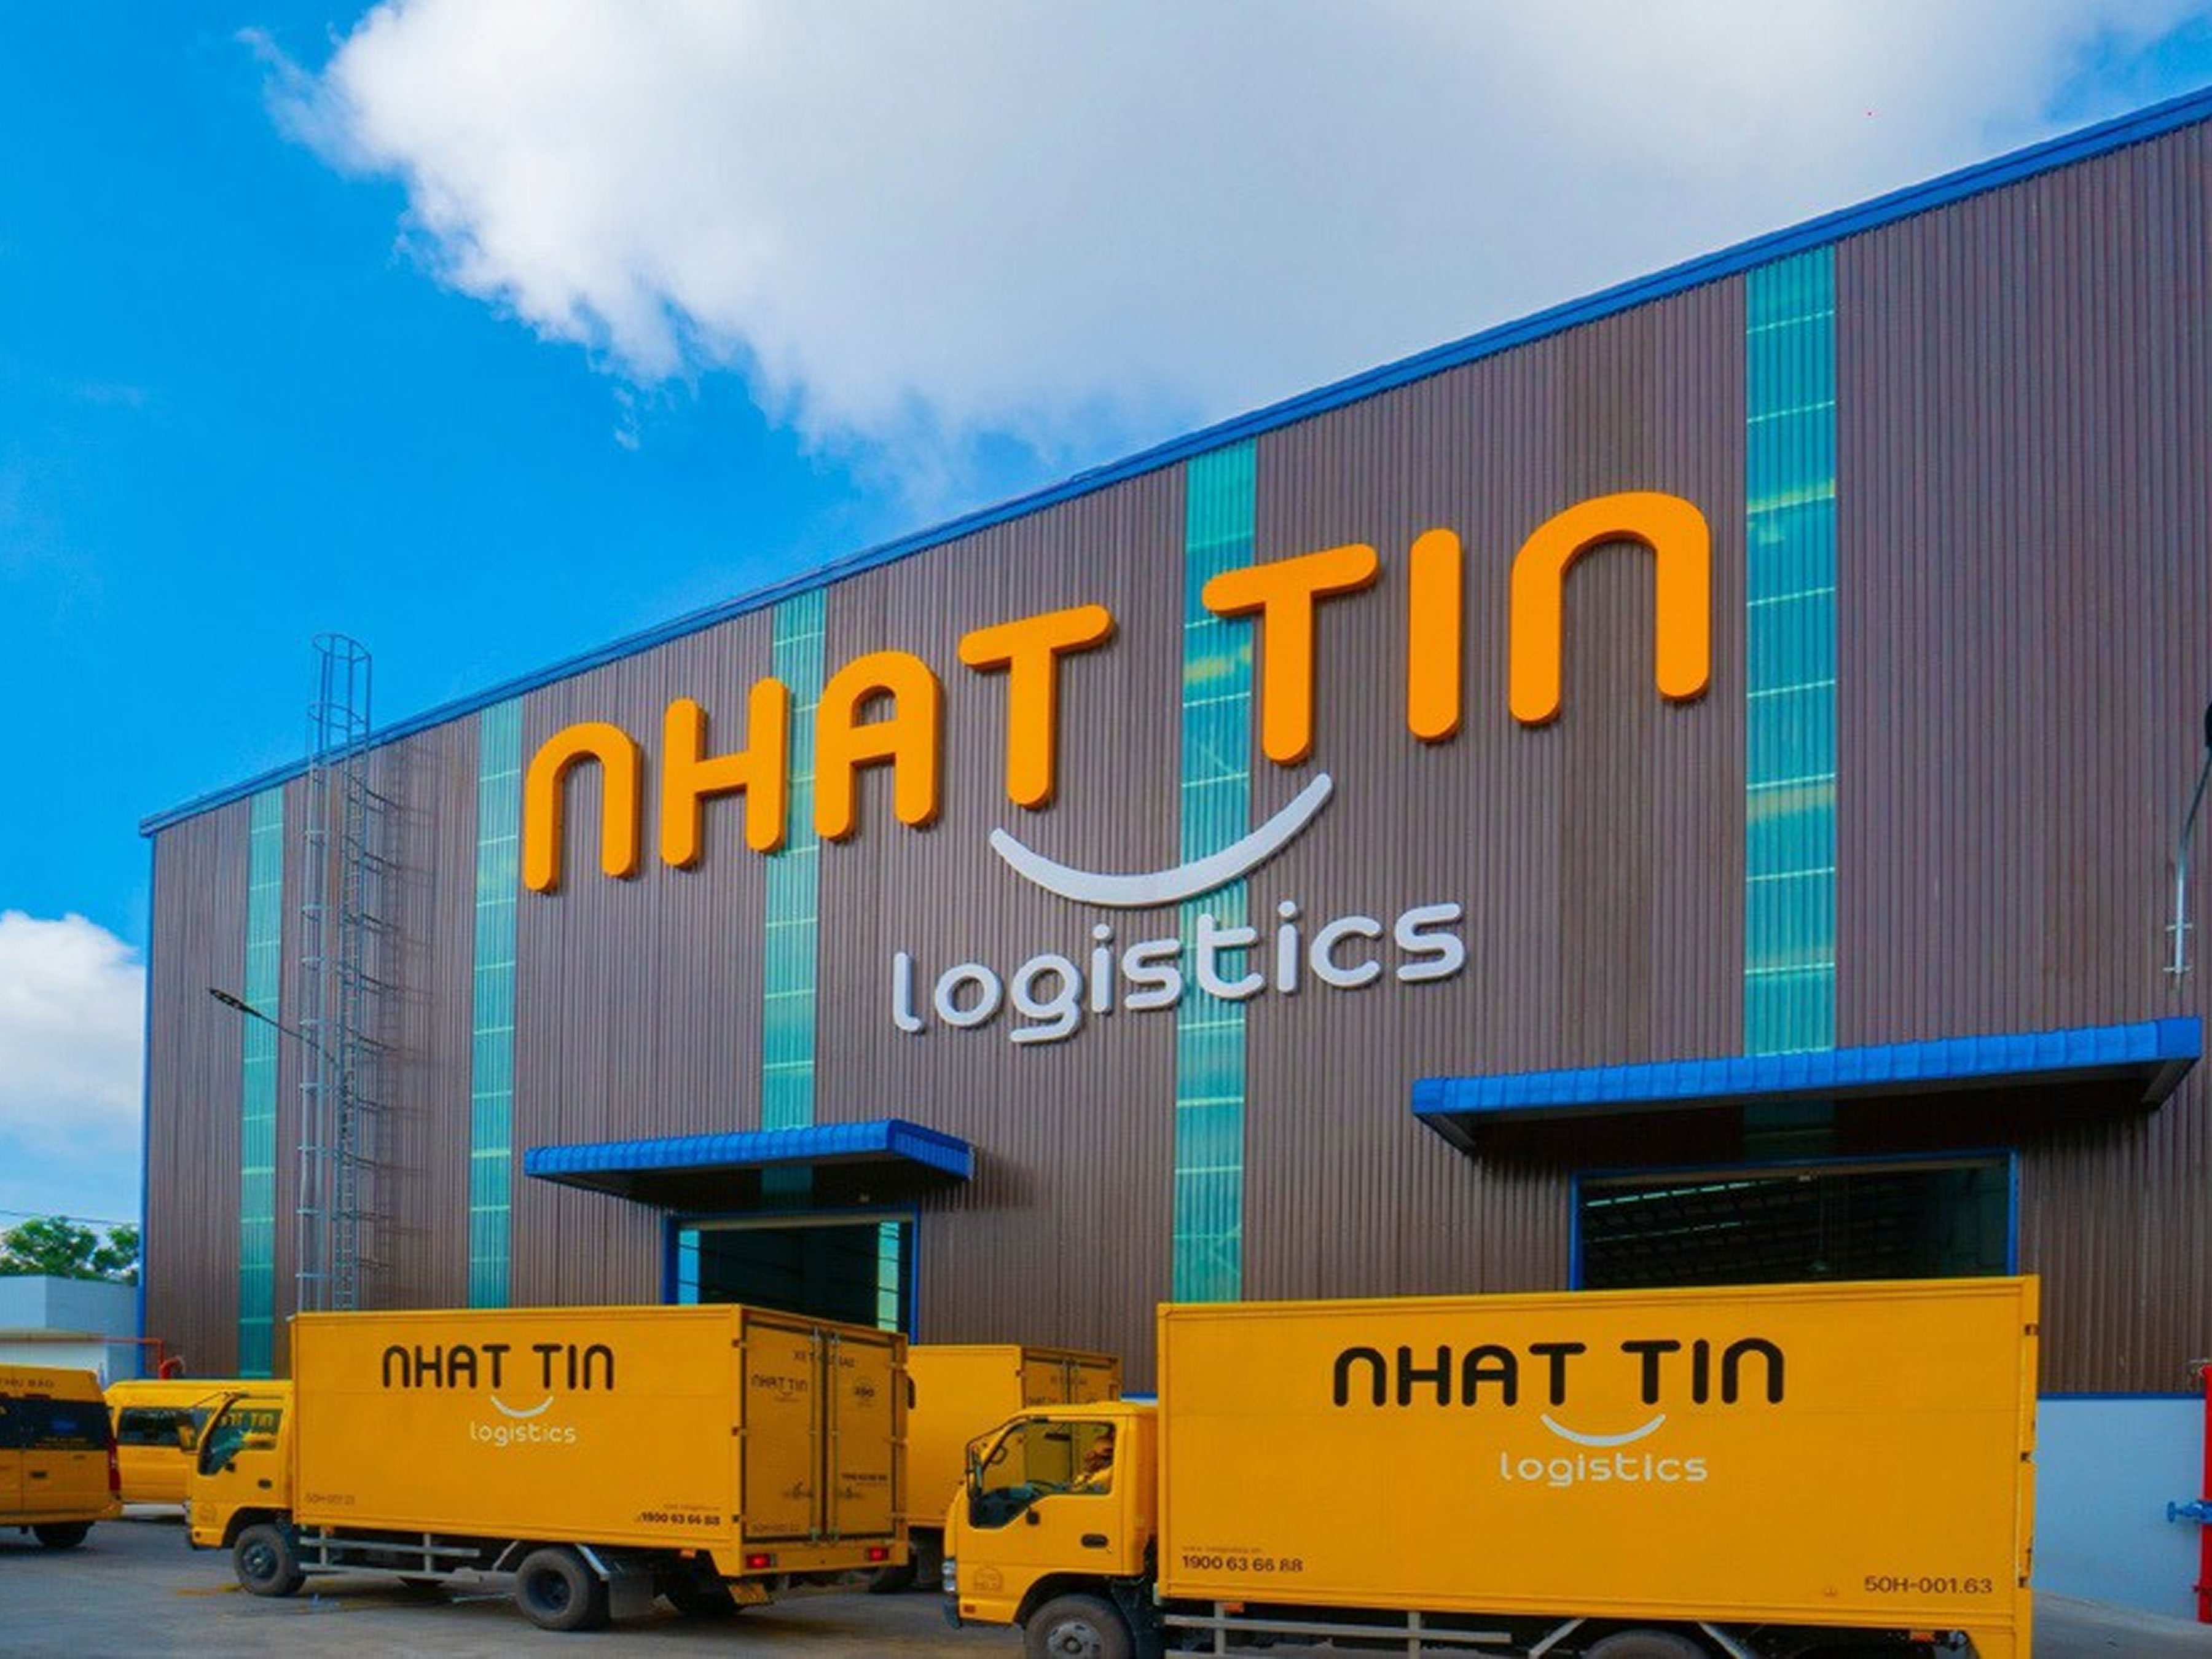 Nhat Tin Logistics fleet